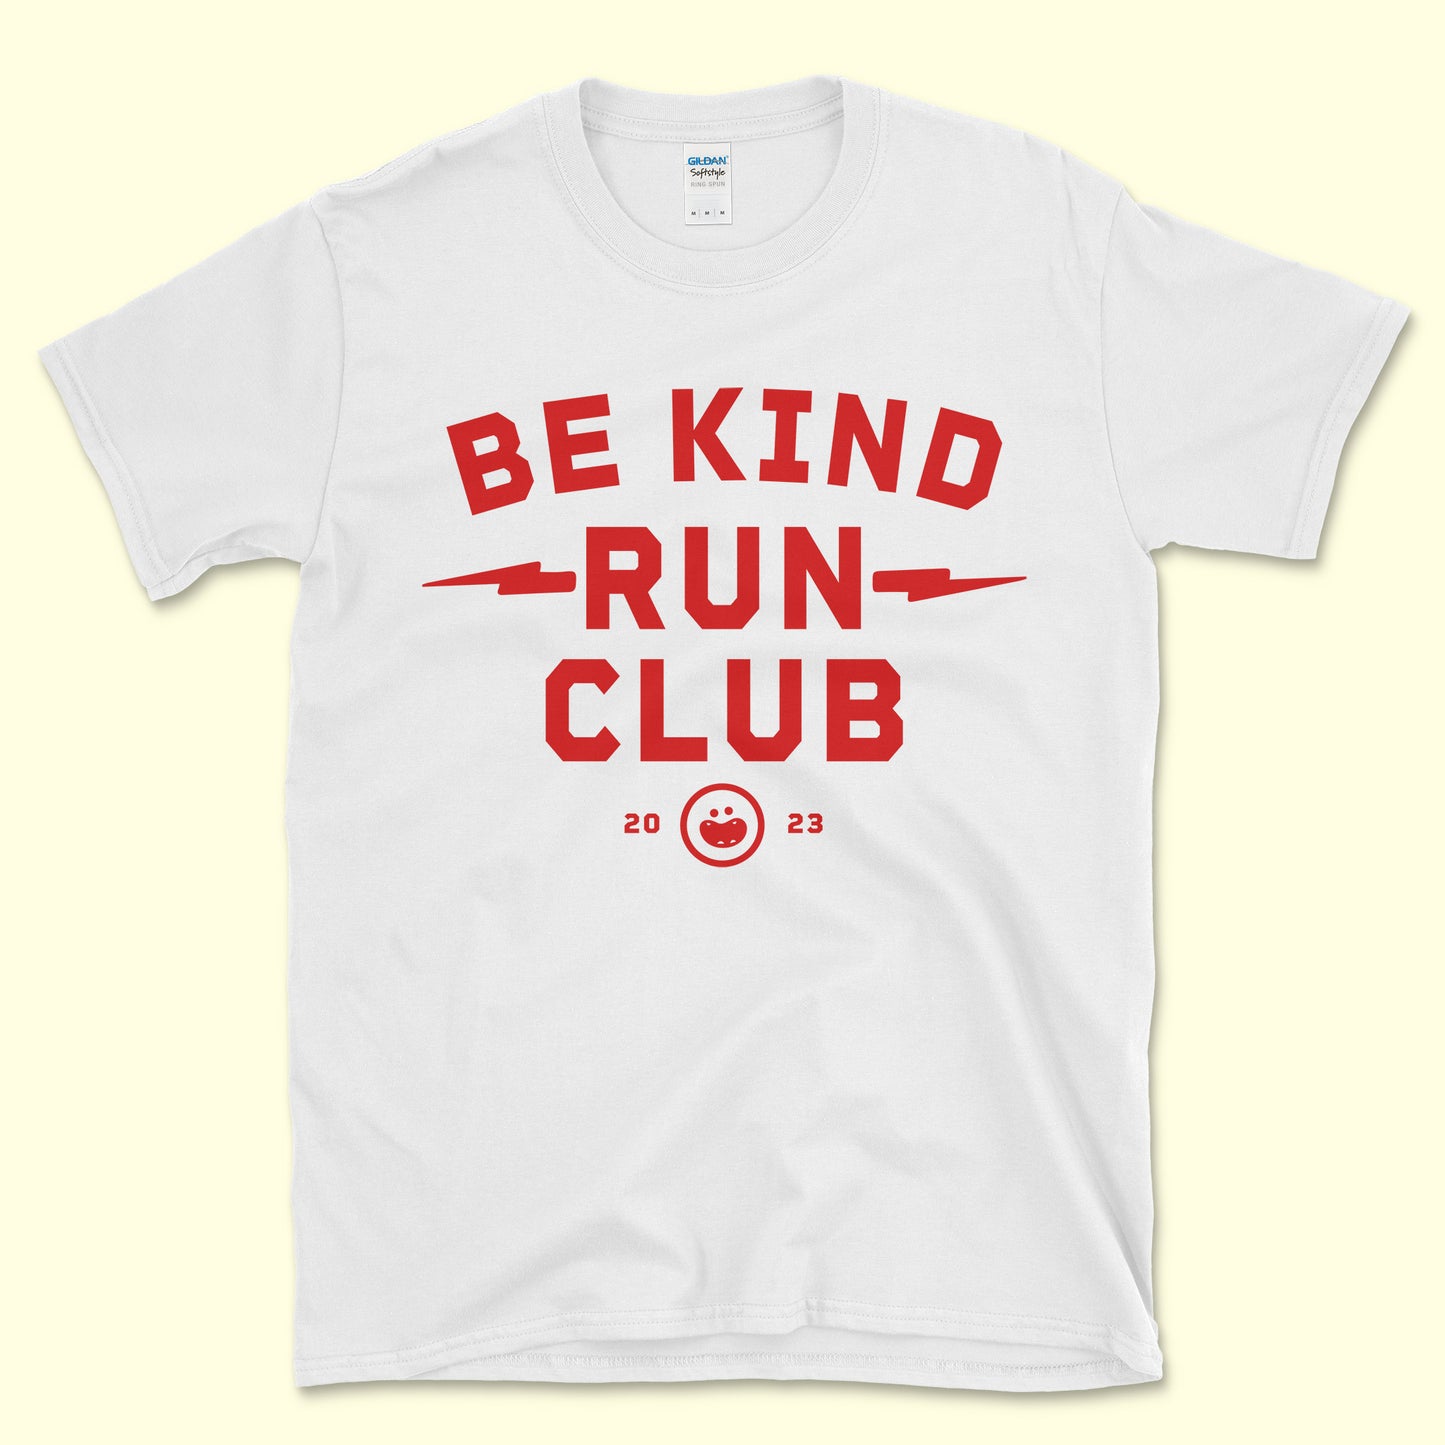 Be Kind Block Letter Run Club Tee - White